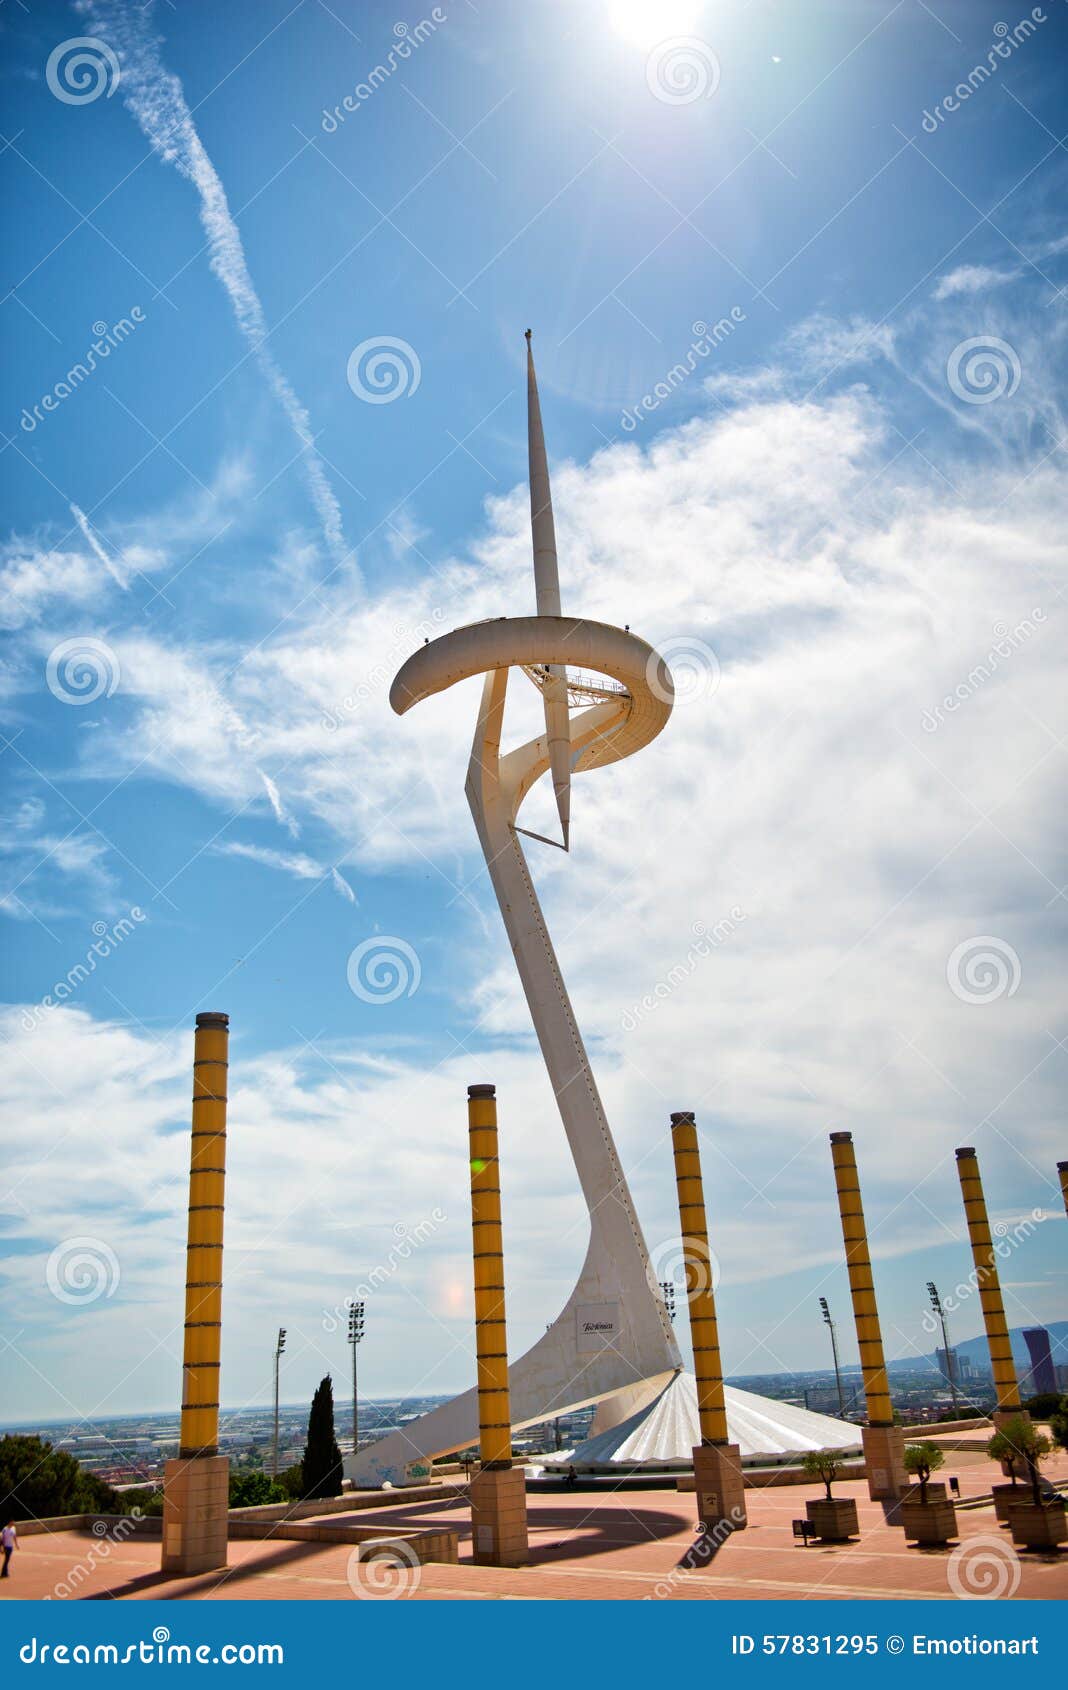 Calatrava Tower Barcelona, Spain Editorial Image - Image of sports ...